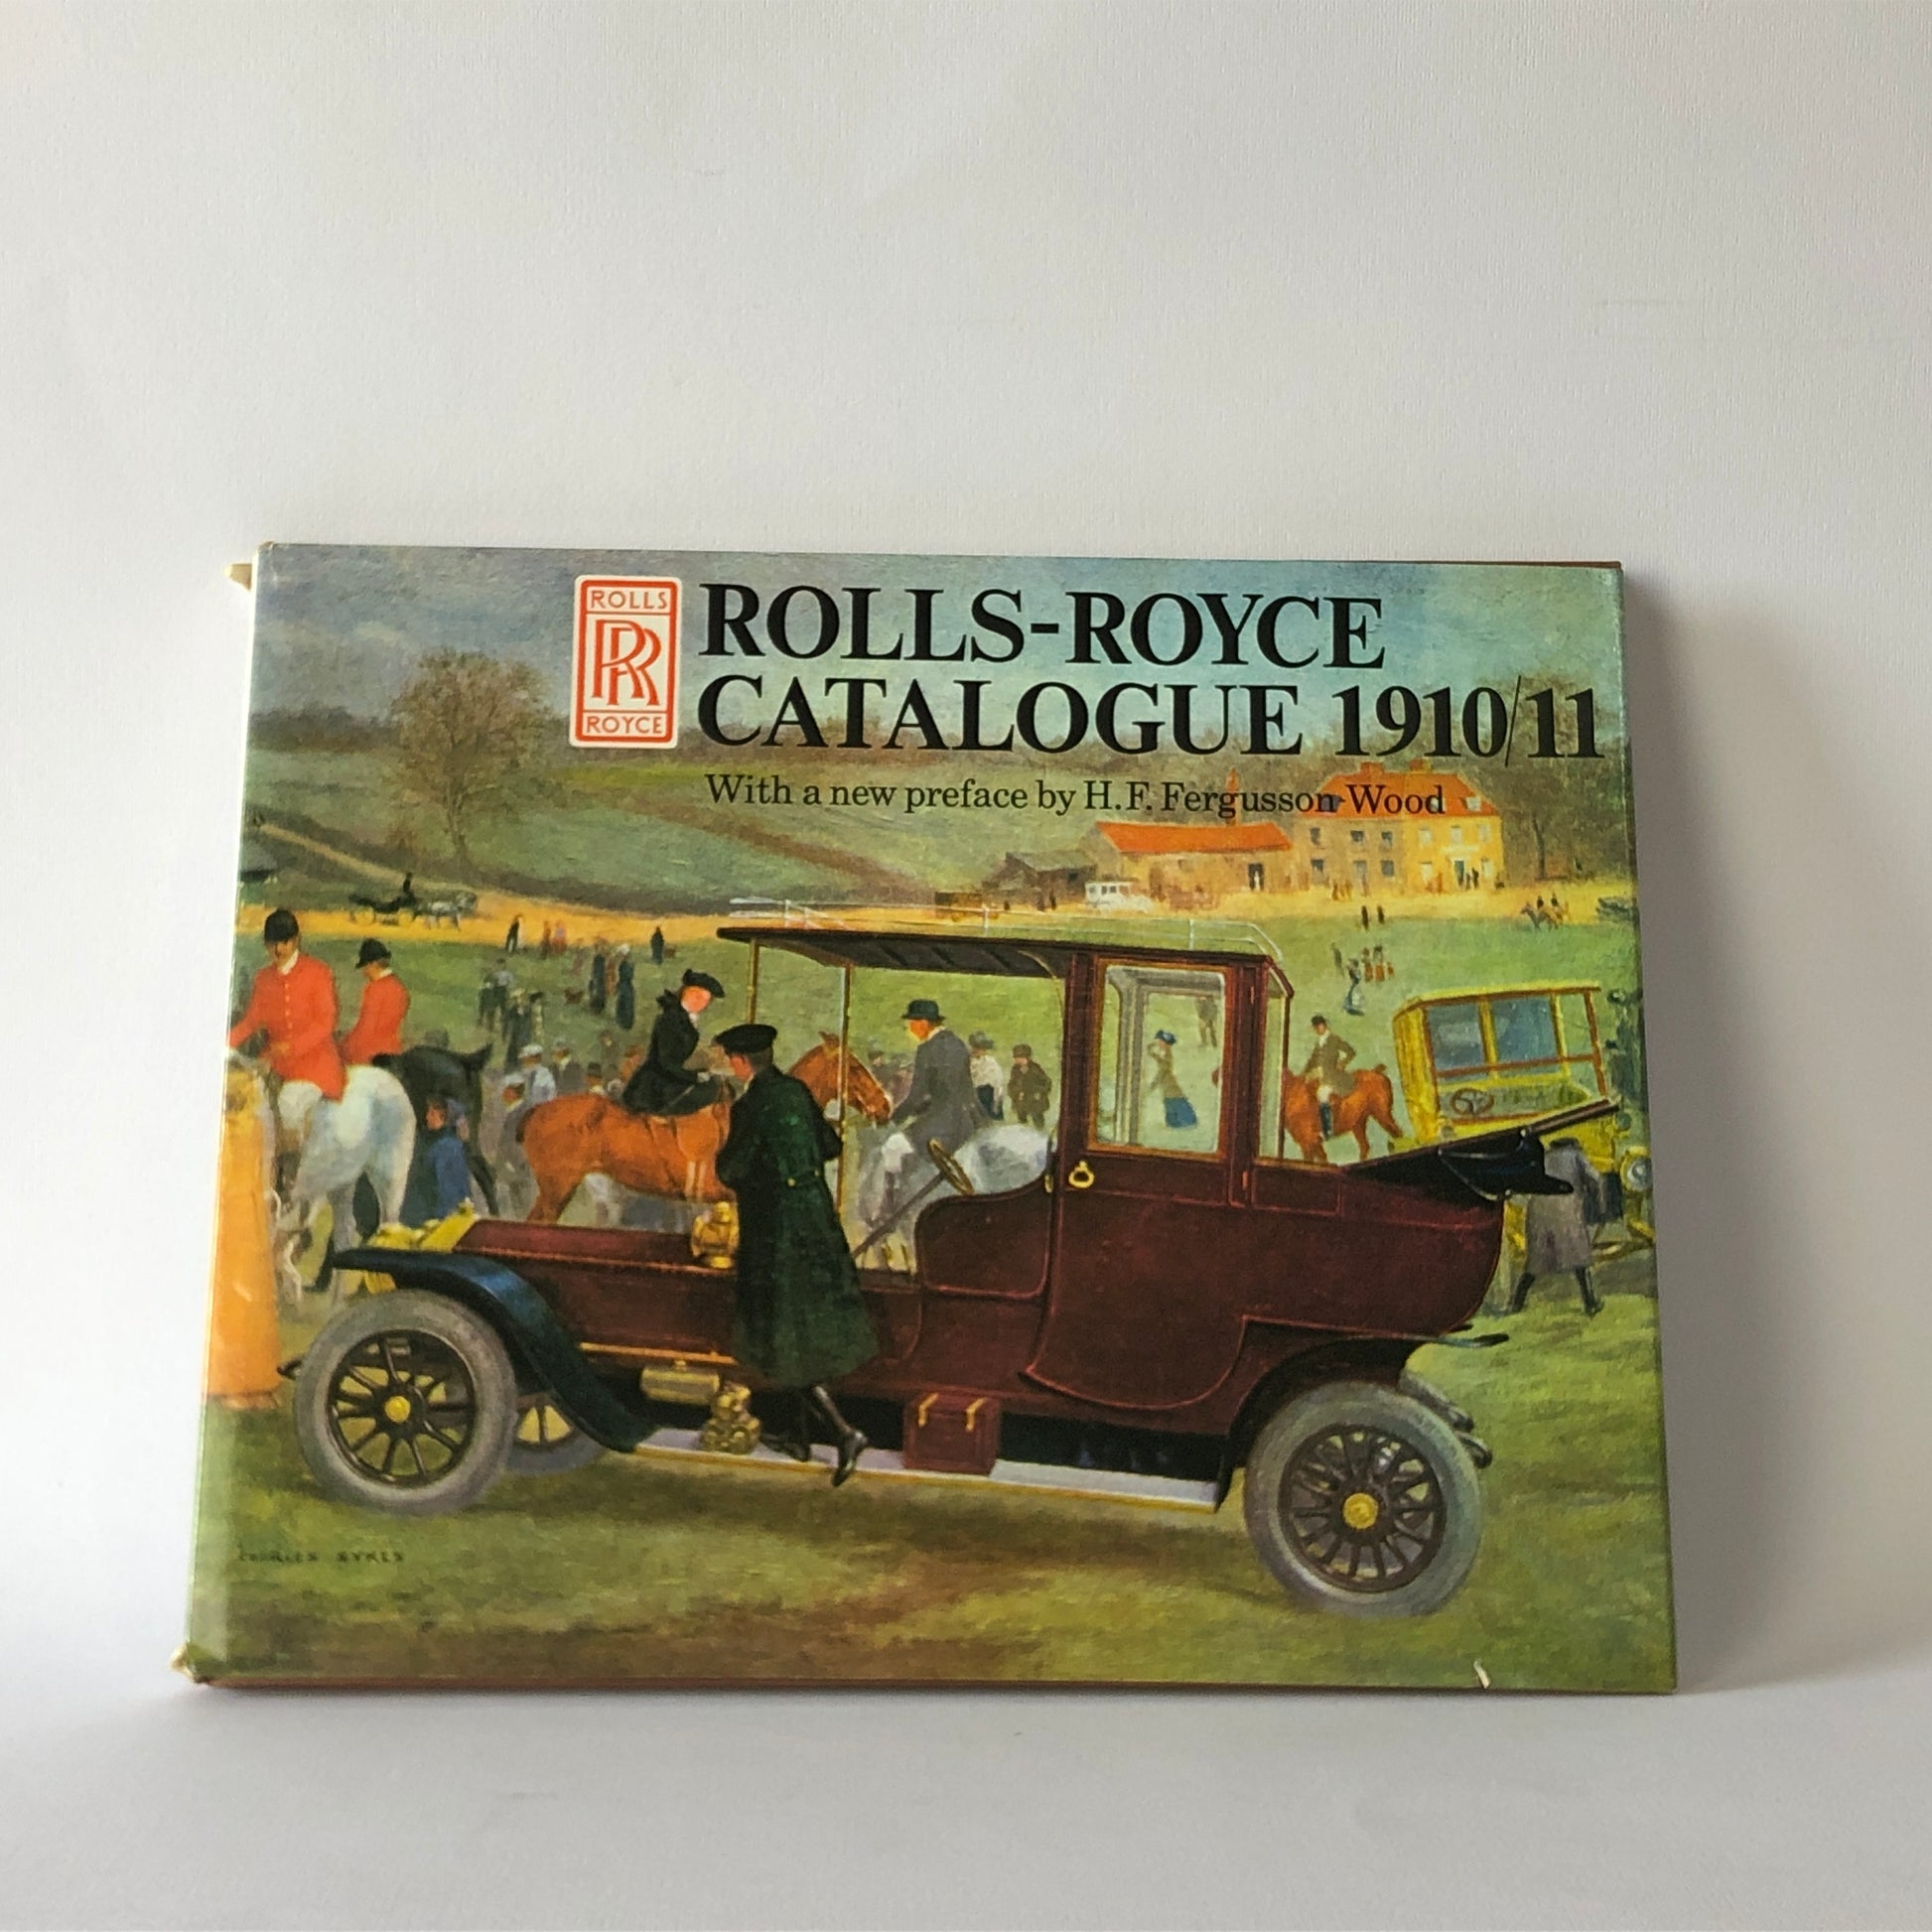 Rolls-Royce, Libro Rolls-Royce Catalogue 1910 1911, ISBN 0517177595 - Raggi's Collectibles' Automotive Art